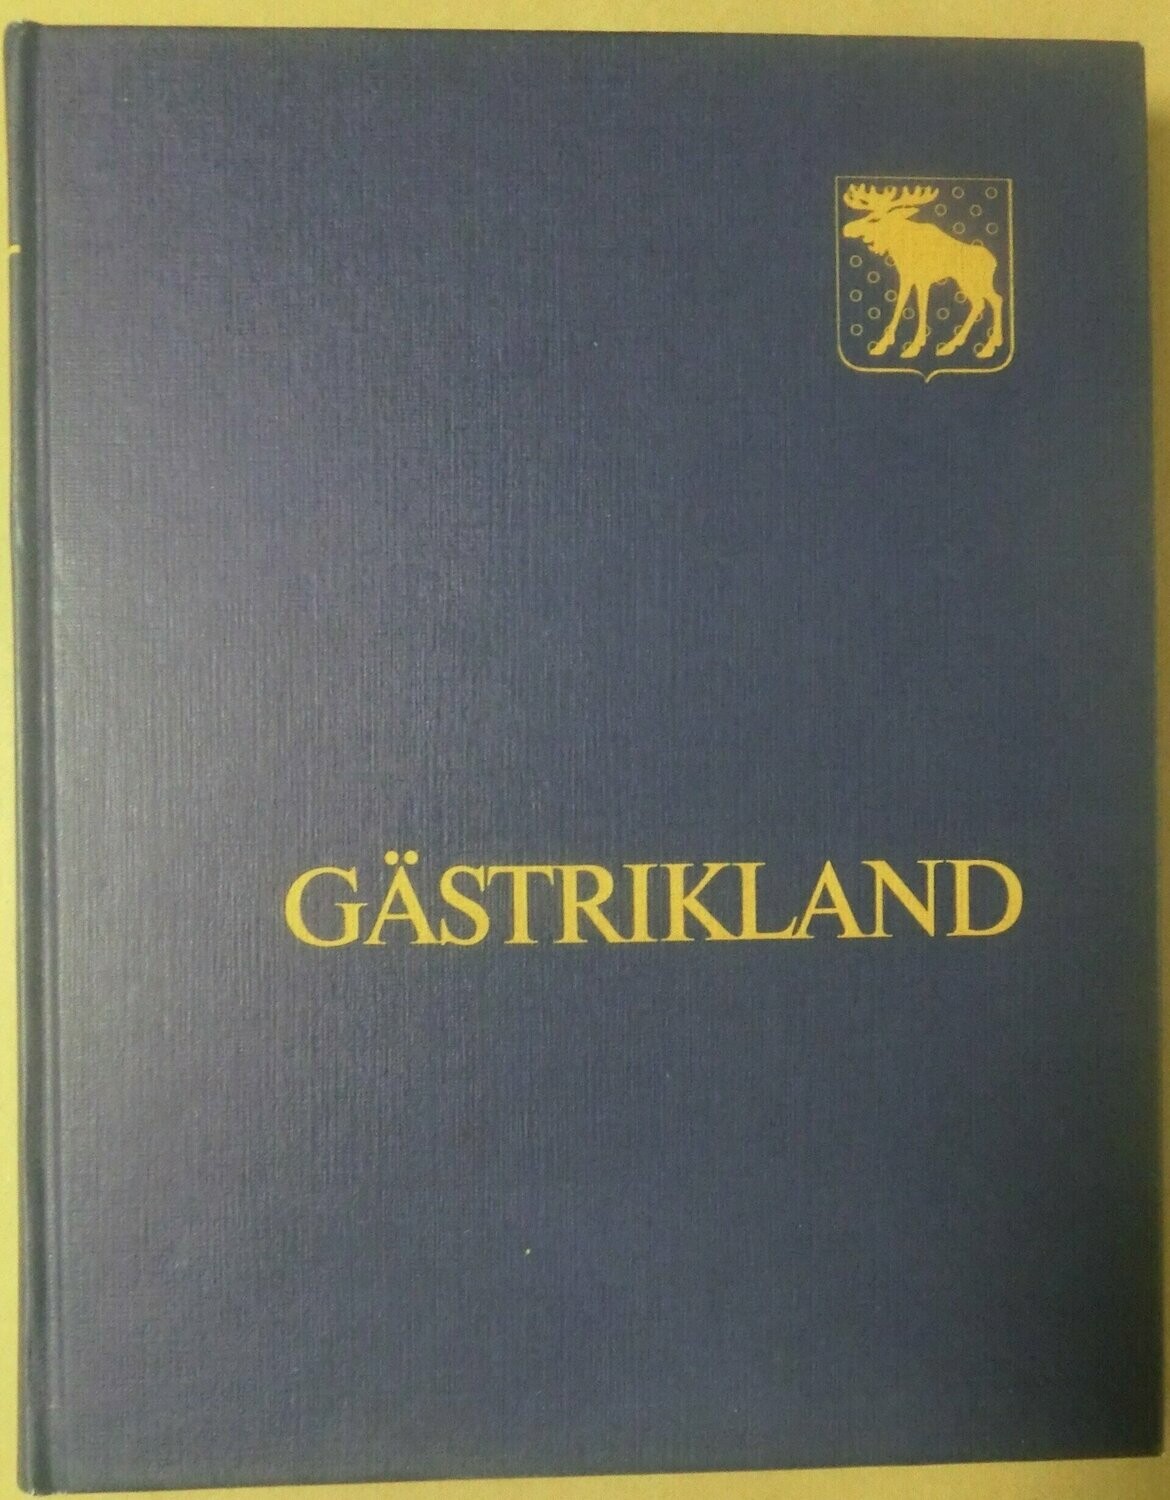 STF årsskrift 1982 - Gästrikland